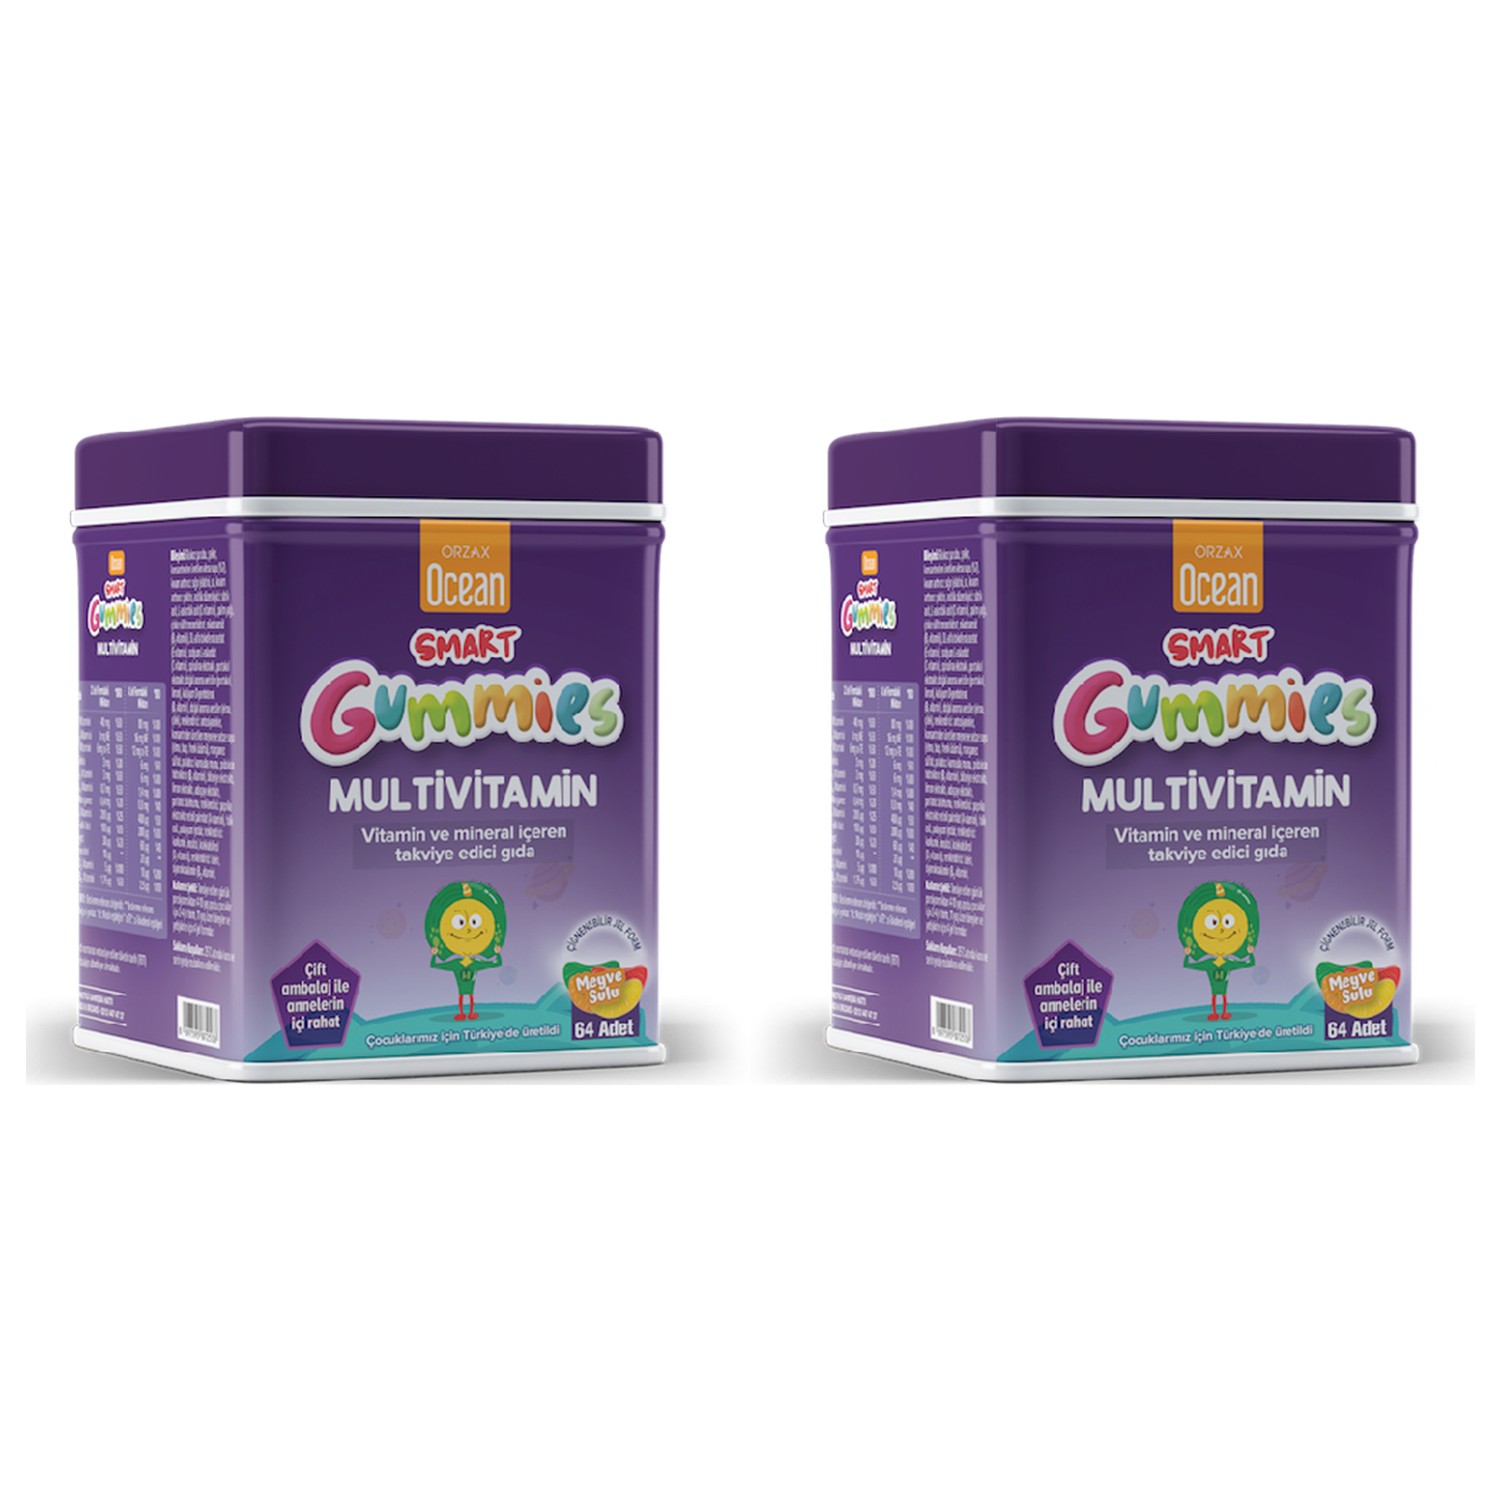 Пищевая добавка Orzax Ocean Smart Gummies Multivitamin Clenchable, 2 упаковки по 64 таблетки